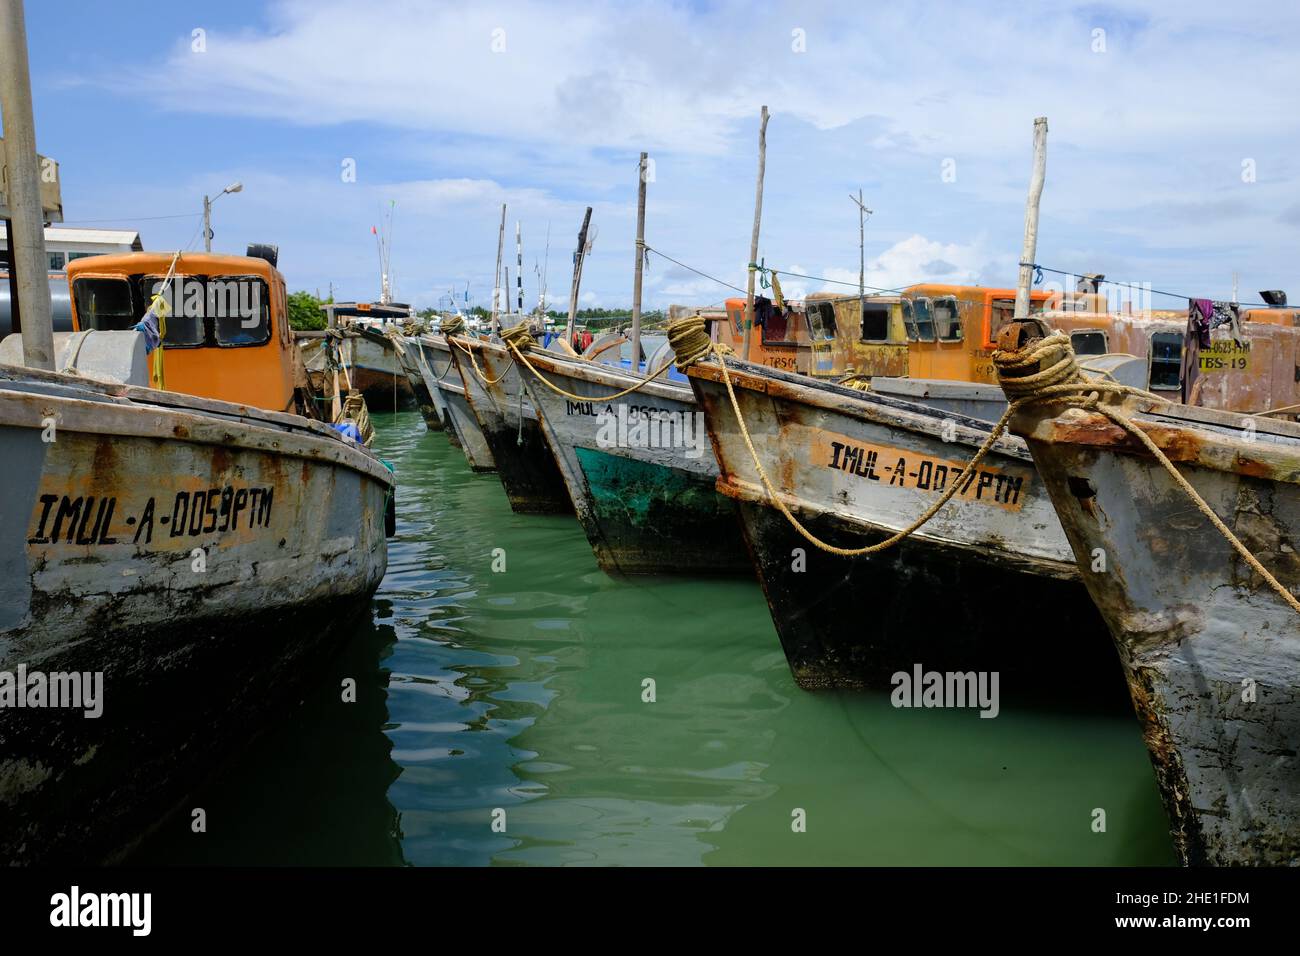 Sri Lanka Kalpitiya  - Fishery harbour fishing vessels Stock Photo